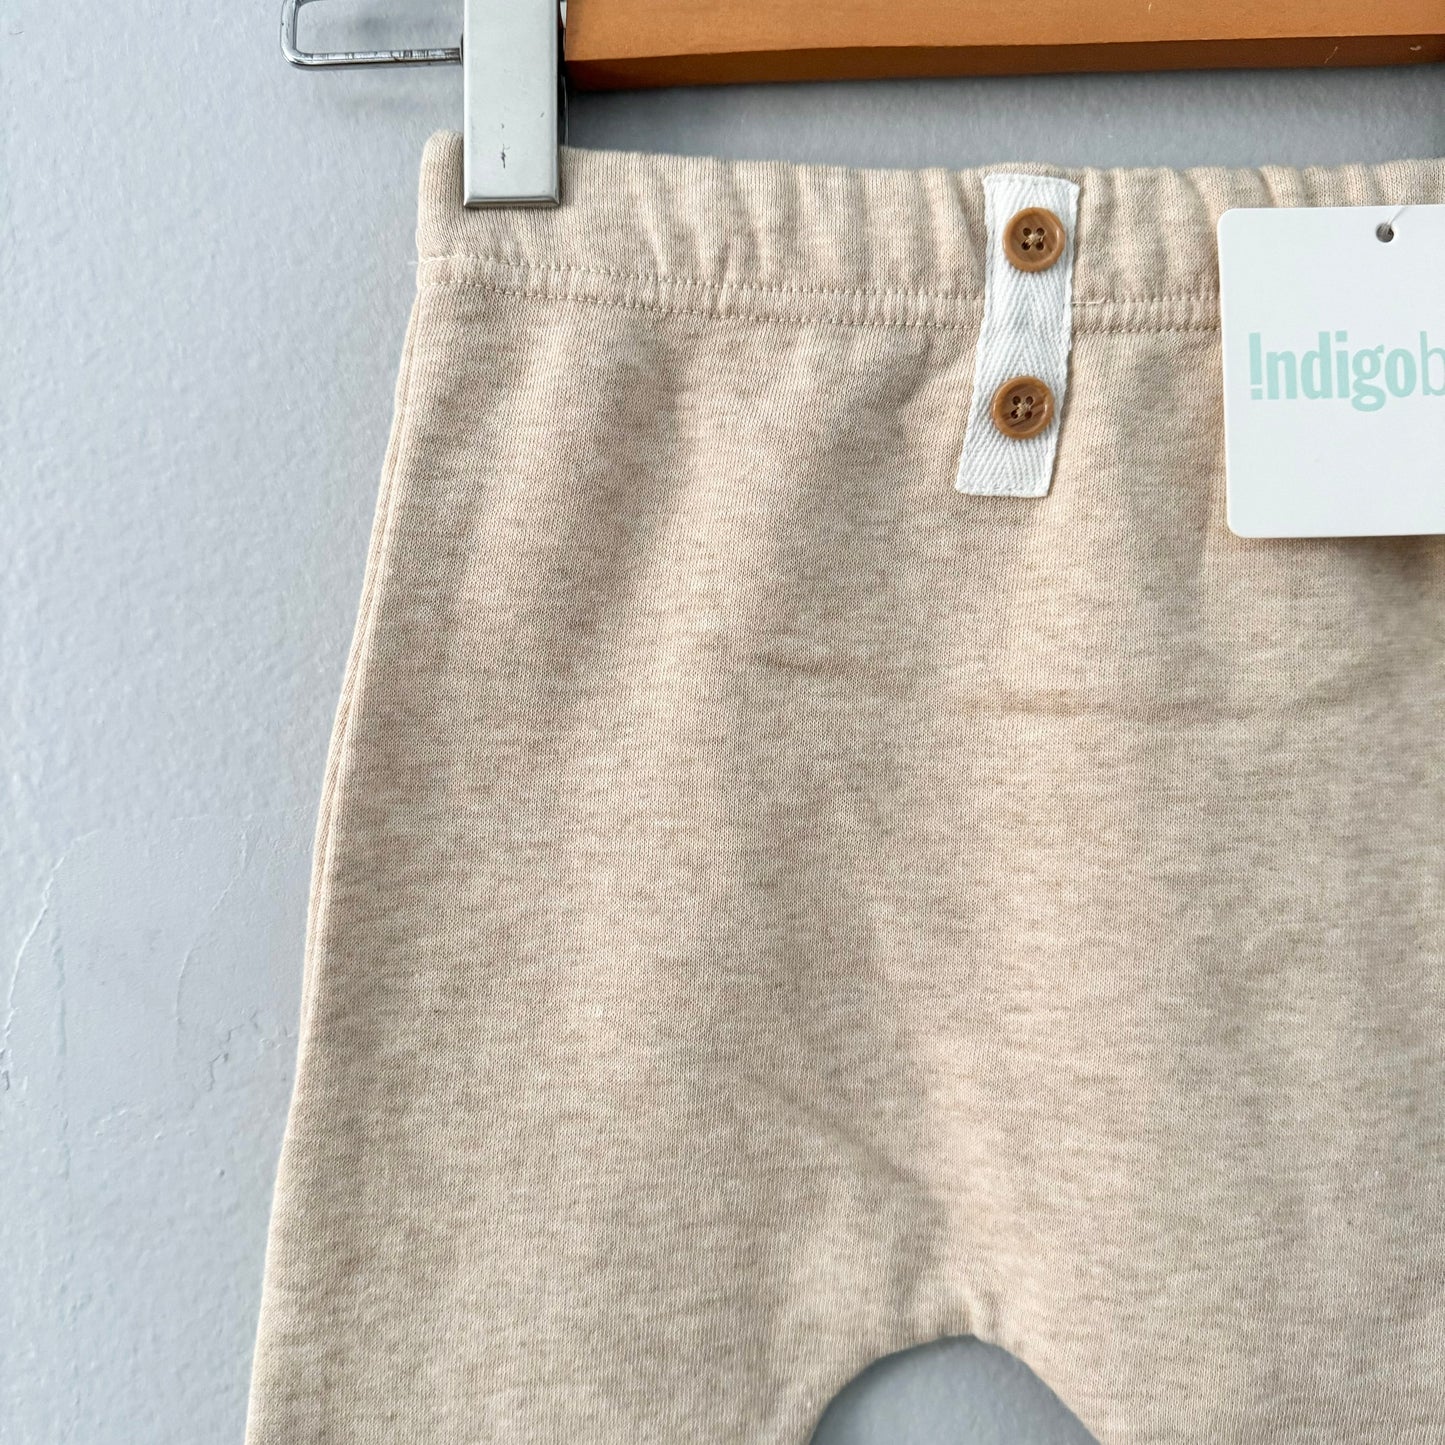 Indigo baby / Beige fleece lined pants / 18-24M